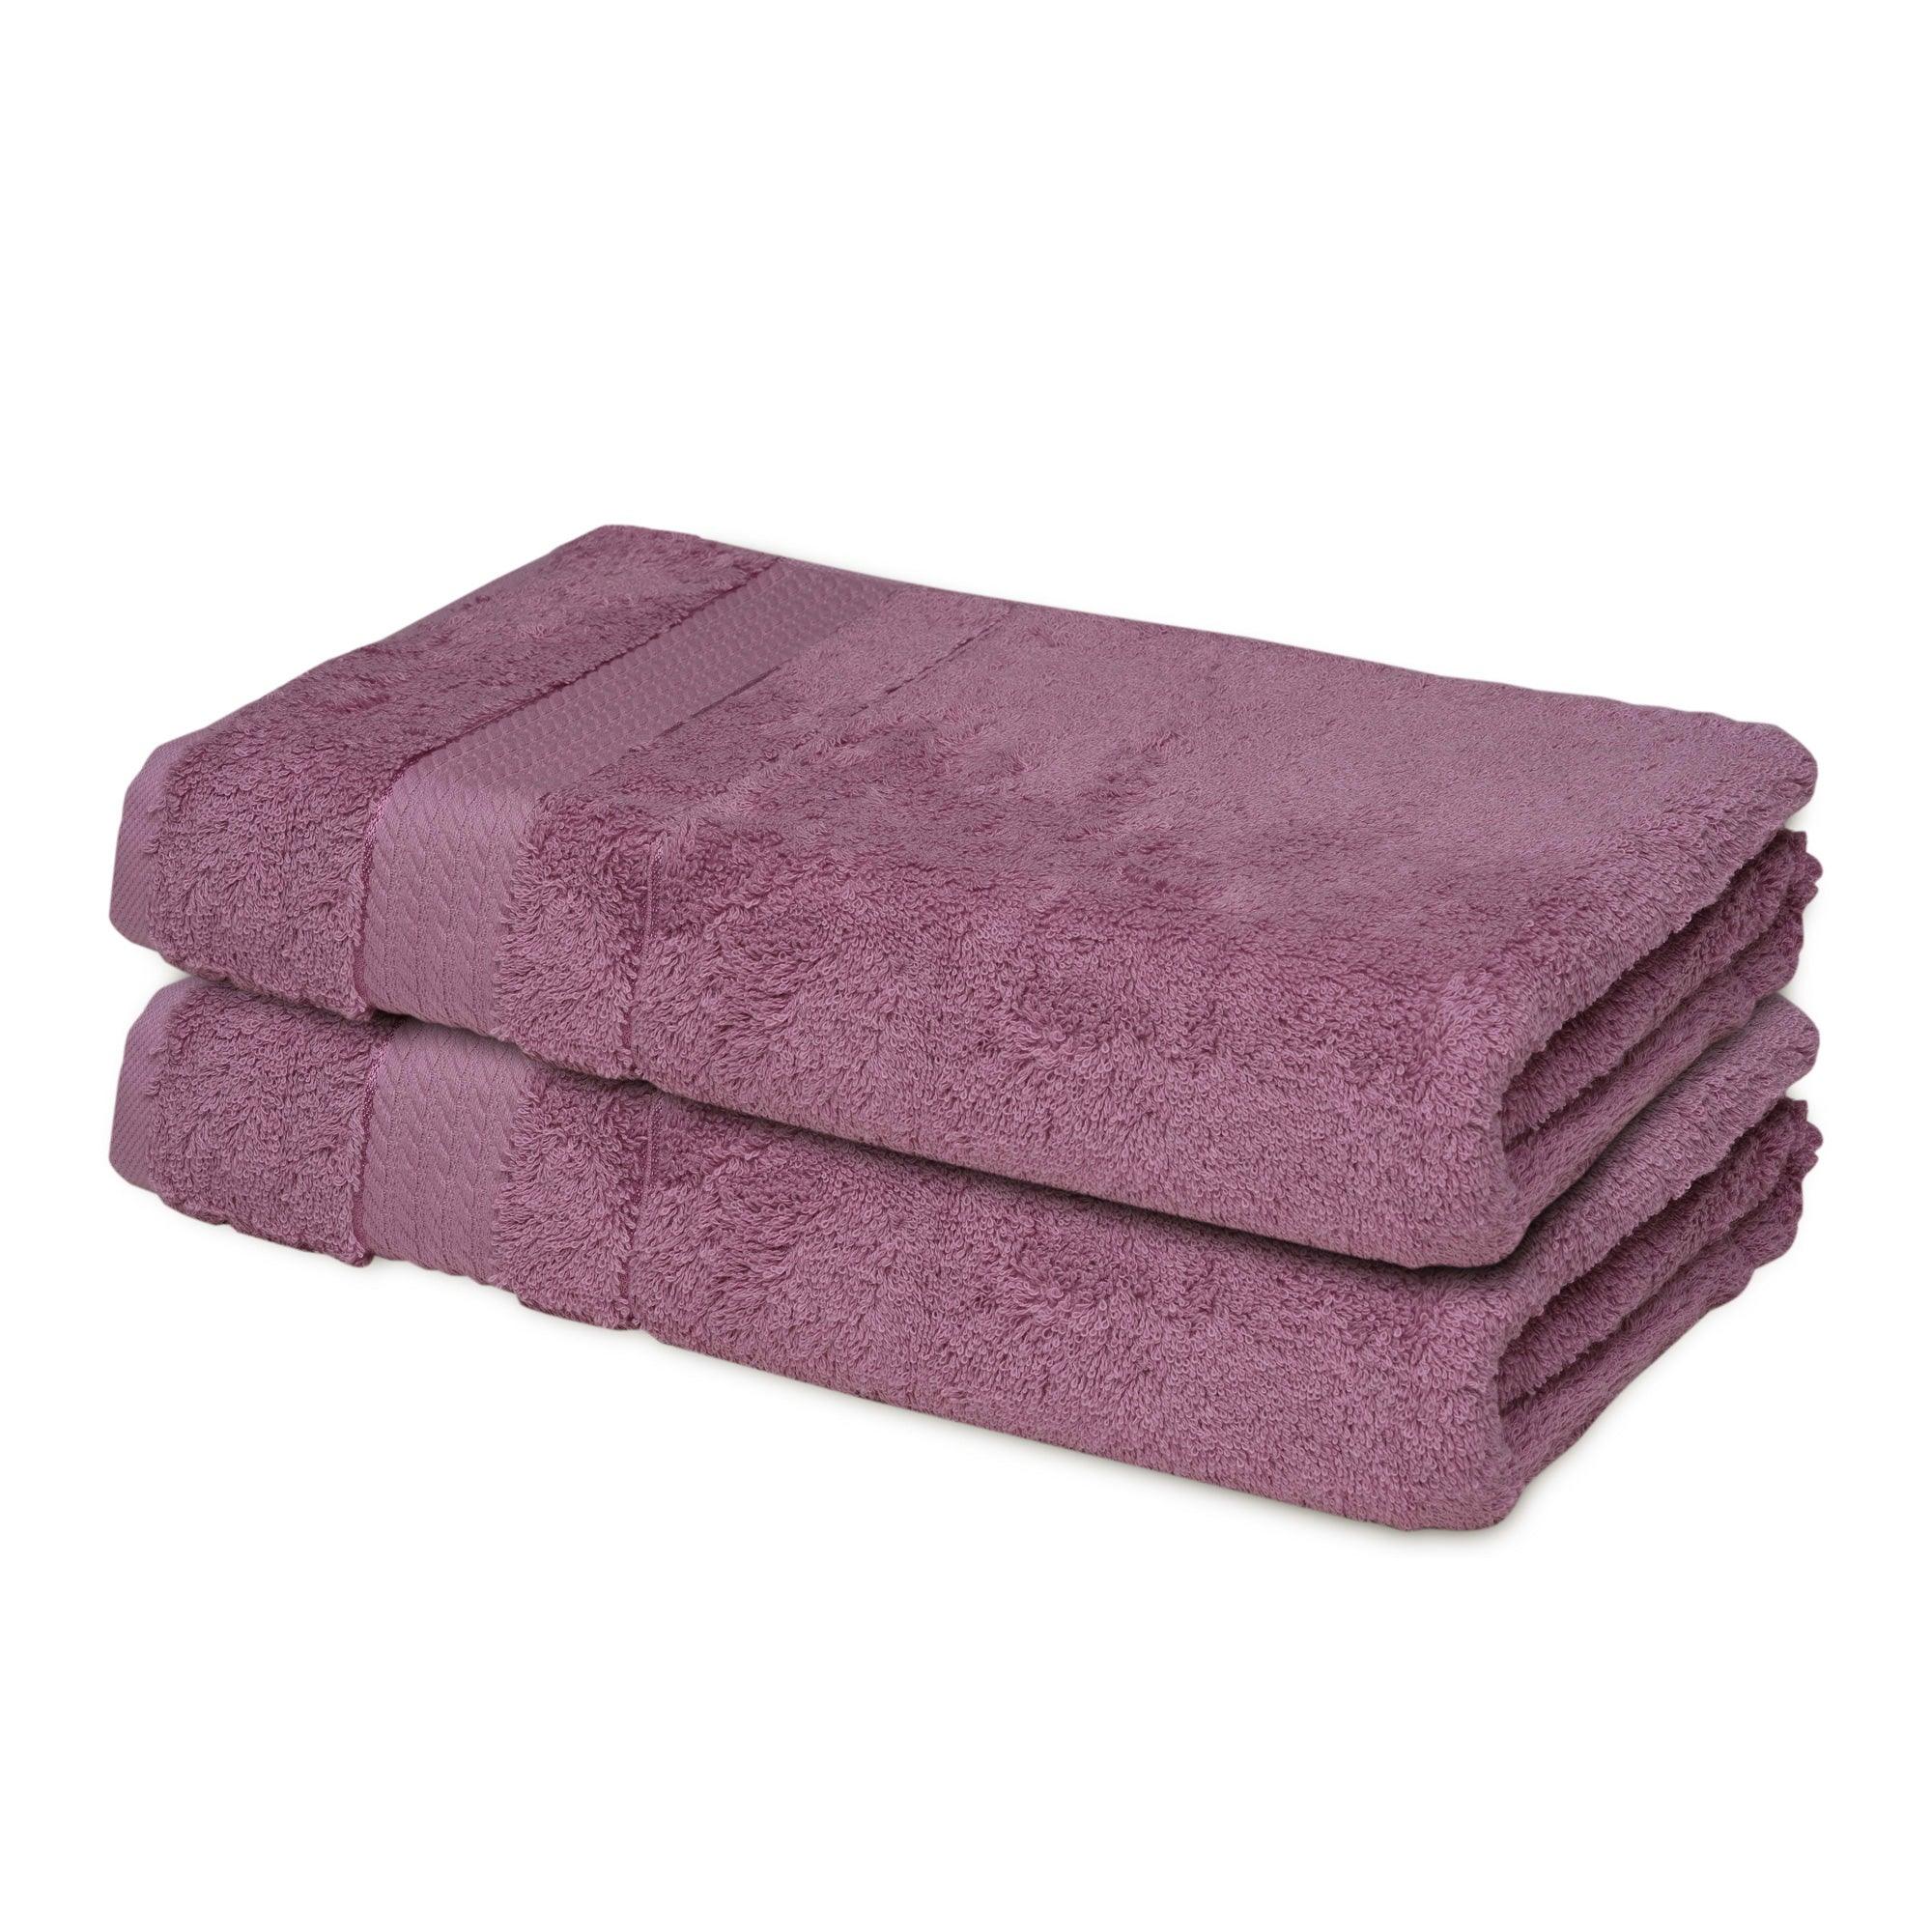 Duvet Cover World Pamauk Embroidered 2-Piece Towel Set Purple Swan White.